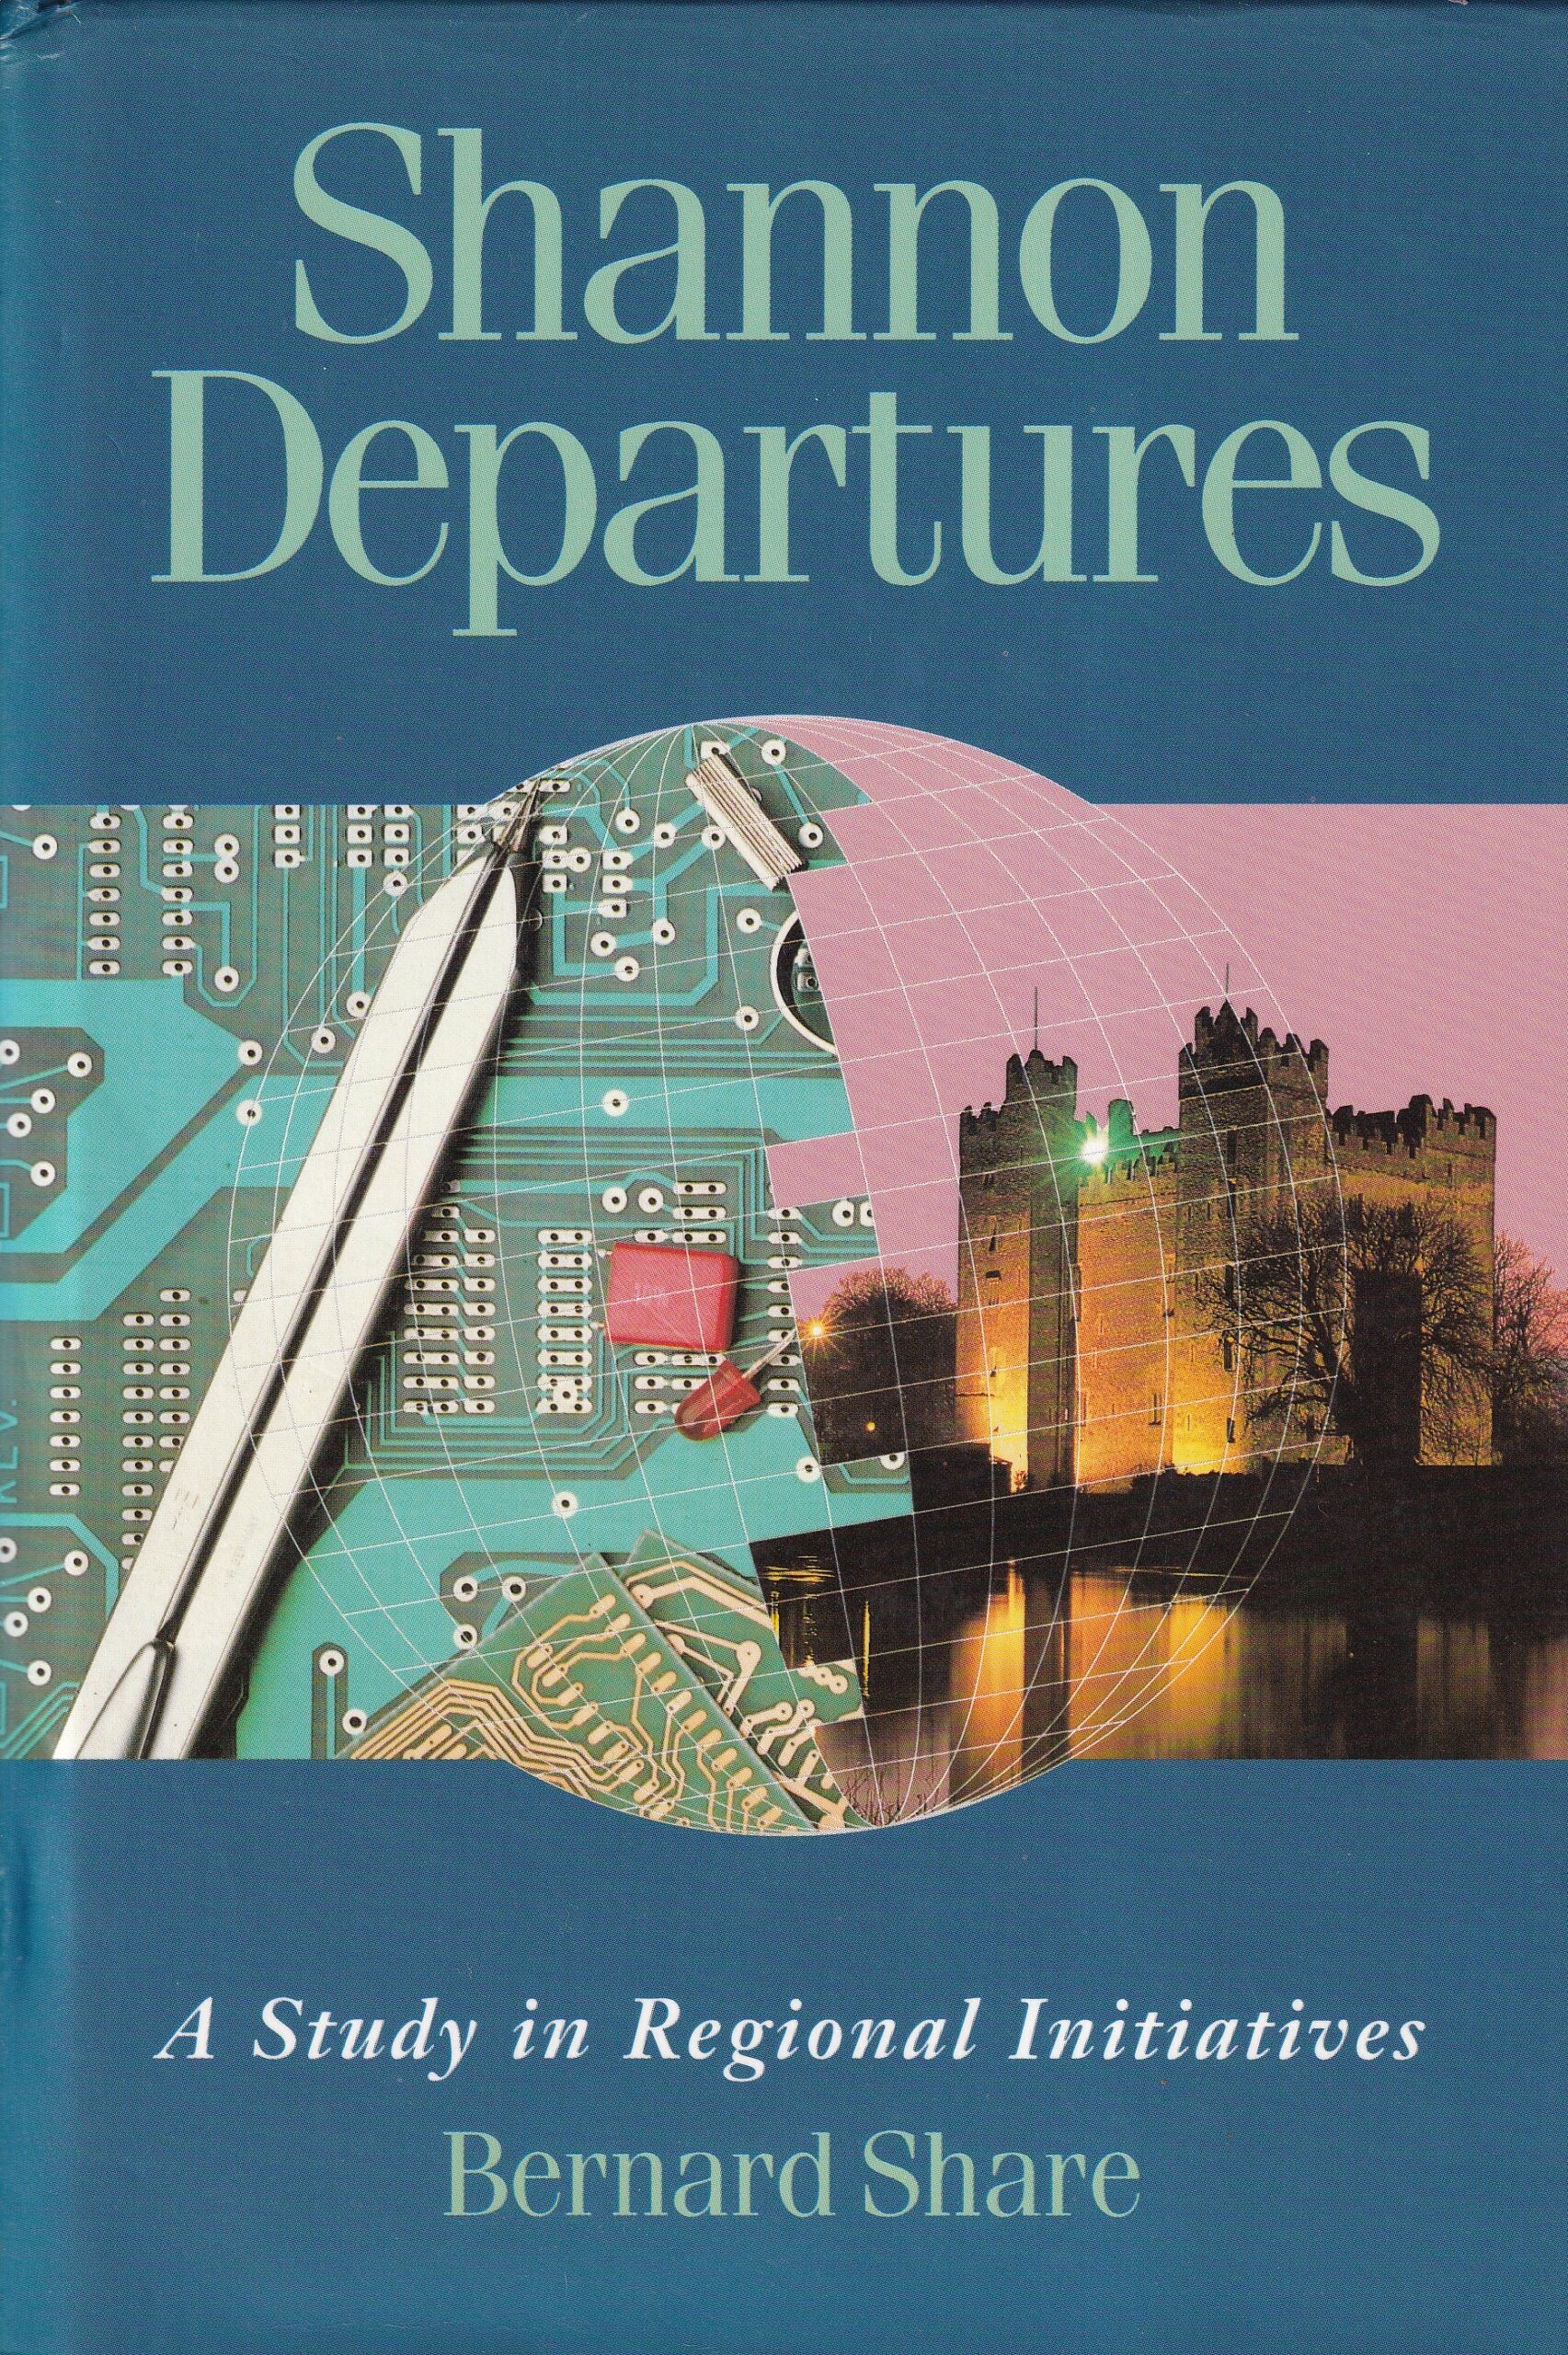 Shannon Departures: A Study in Regional Initiatives | Bernard Share | Charlie Byrne's